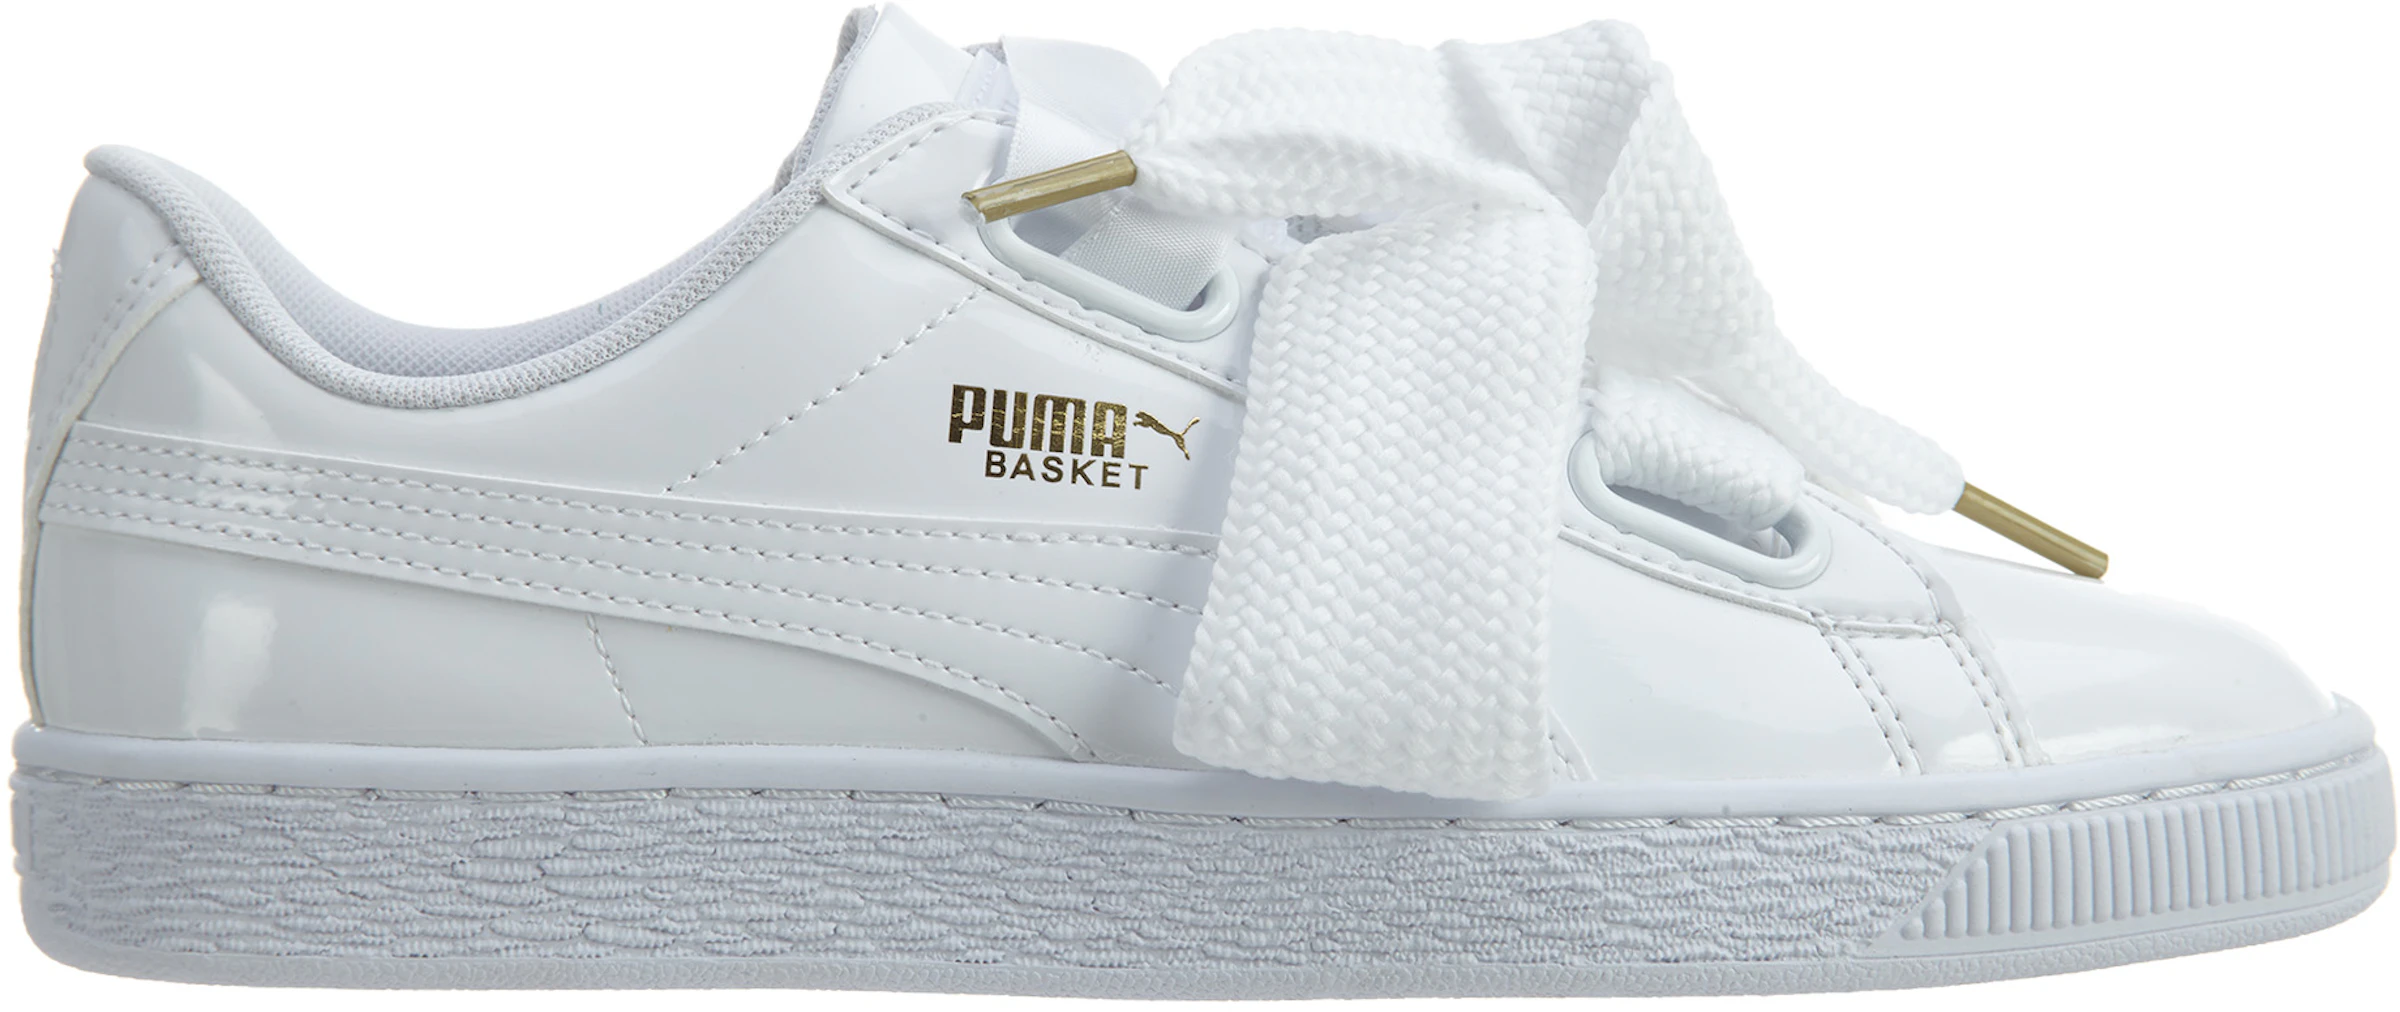 Adviseur Hijgend Uitstroom Puma Basket Heart Patent Puma White Puma White (Women's) - 363073 - US